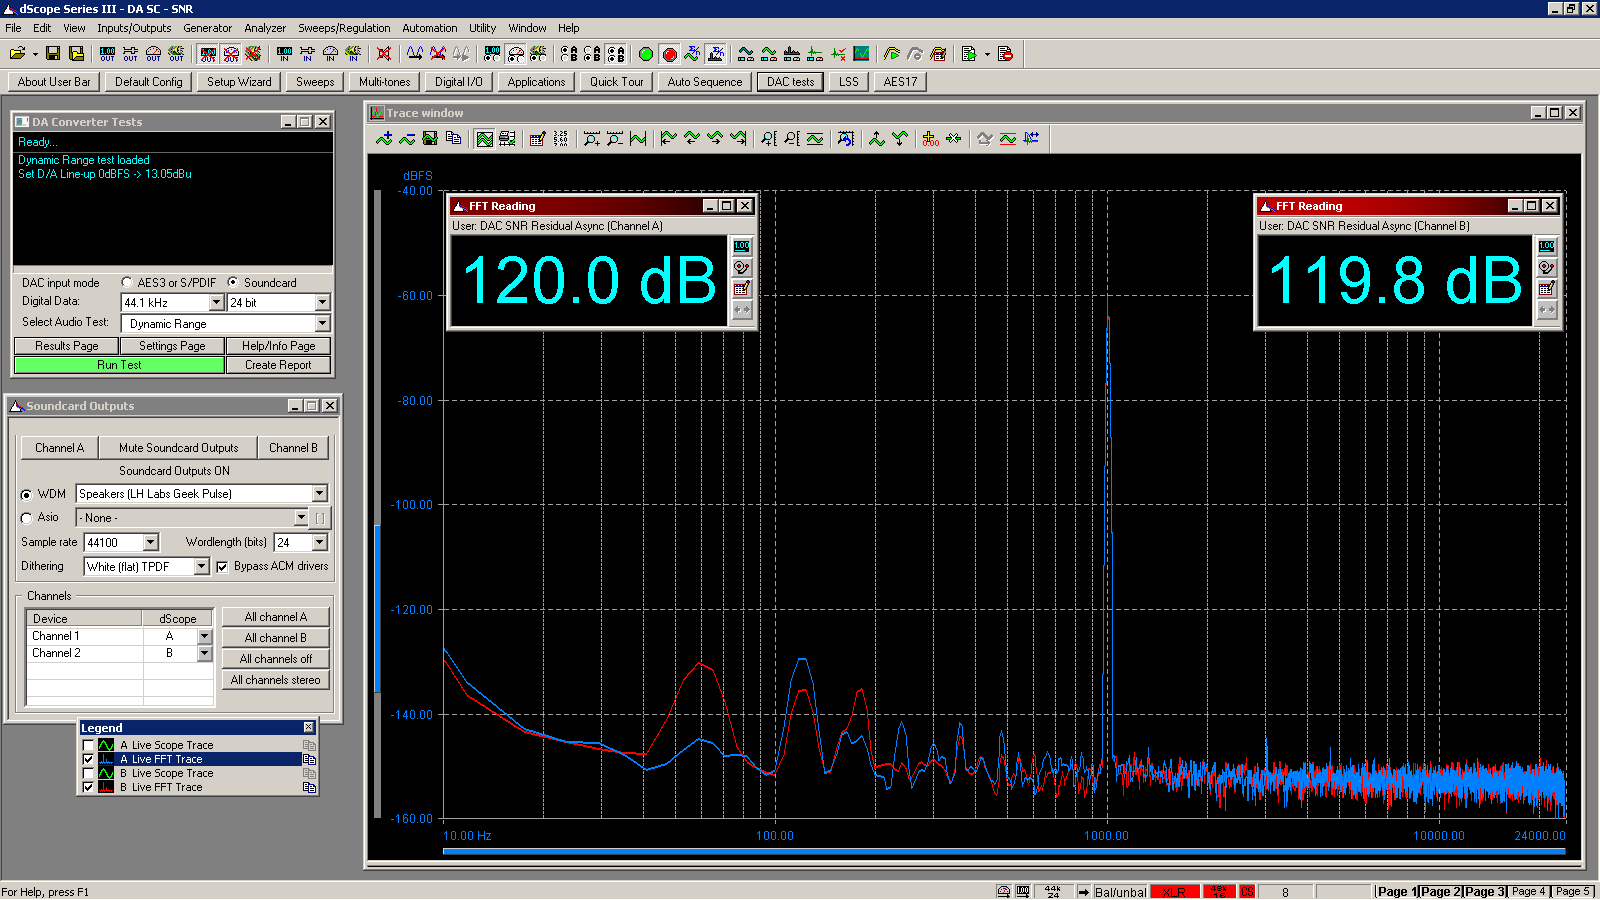 20151010 pulse X infinity SE dynamic range - FTM filter.PNG